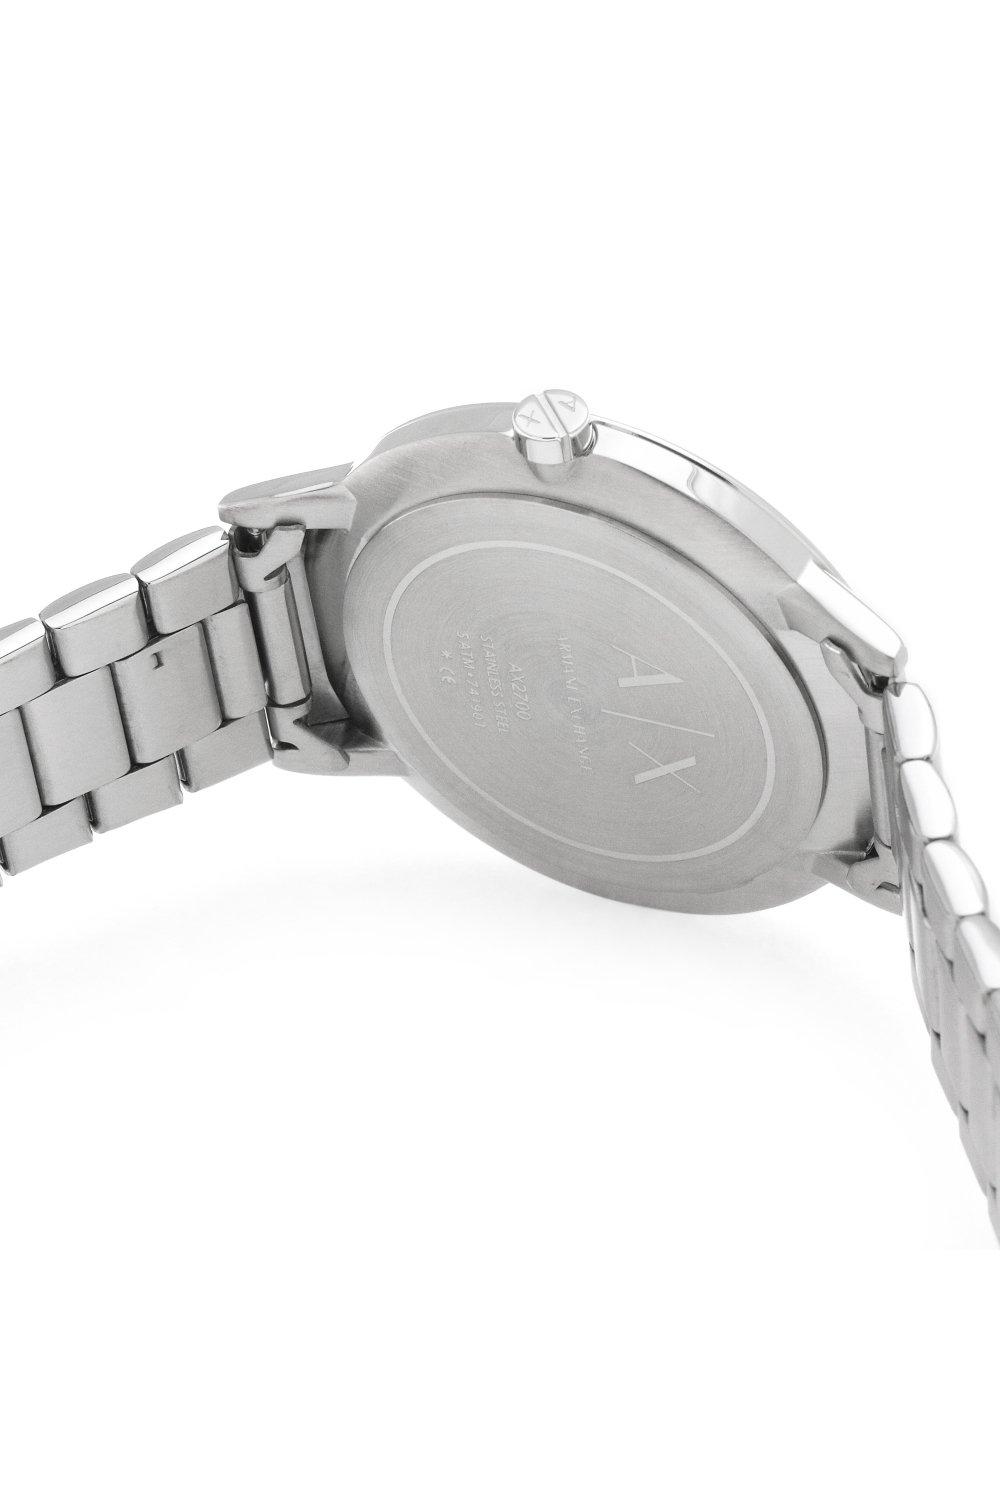 Watches | Stainless Steel Fashion Watch Analogue Ax2700 | Exchange - Armani Quartz